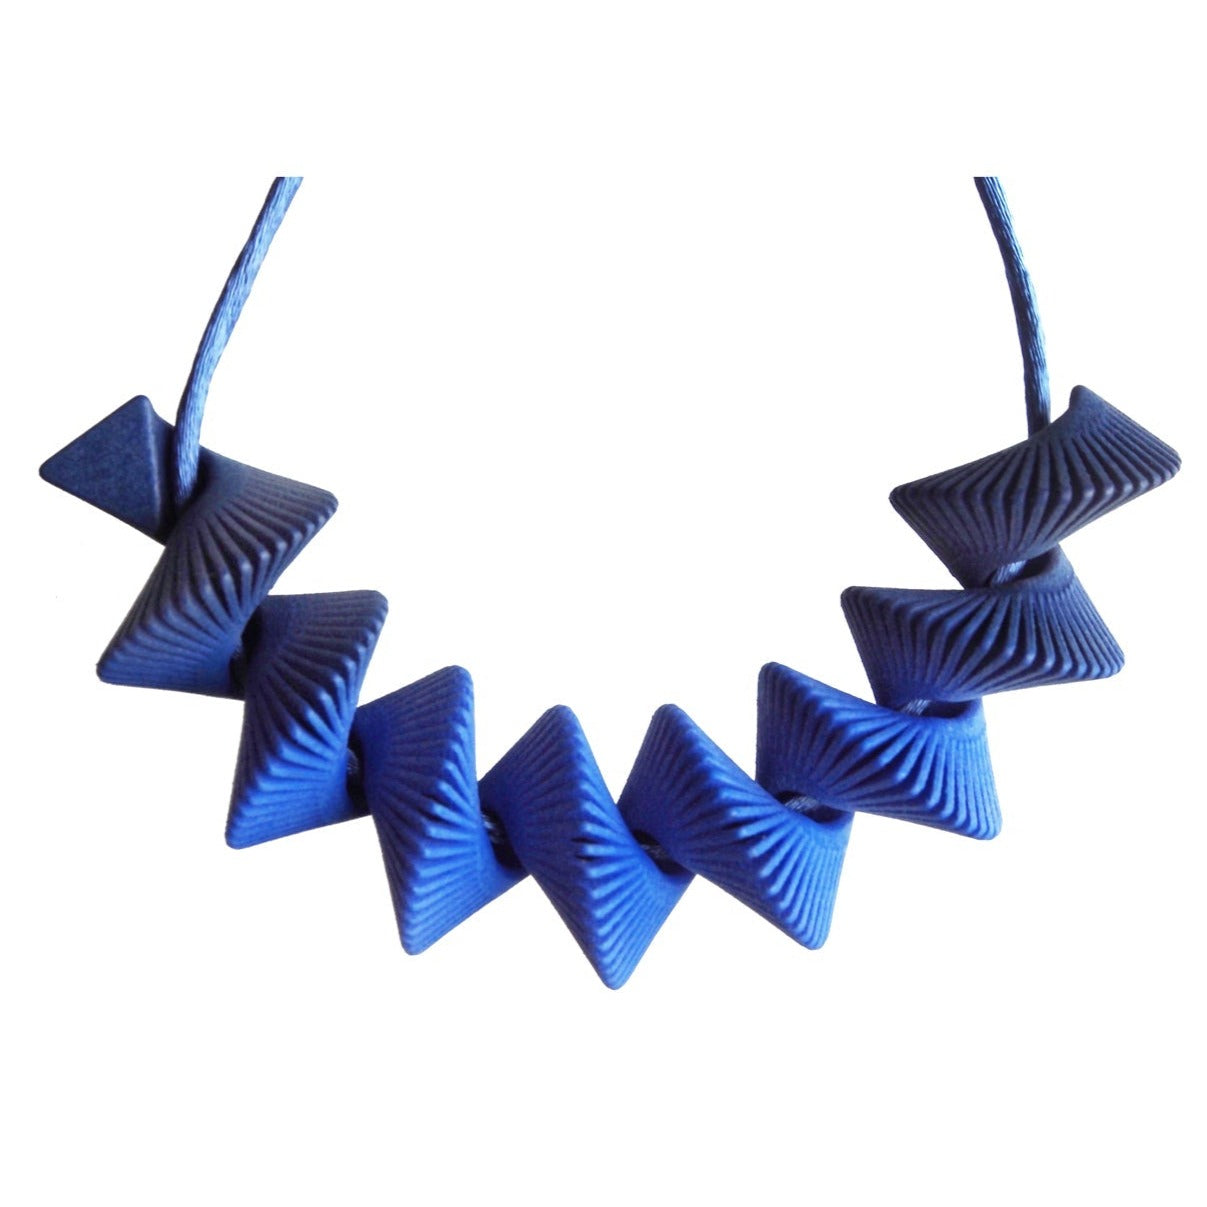 Blue Helix Necklace - The Nancy Smillie Shop - Art, Jewellery & Designer Gifts Glasgow